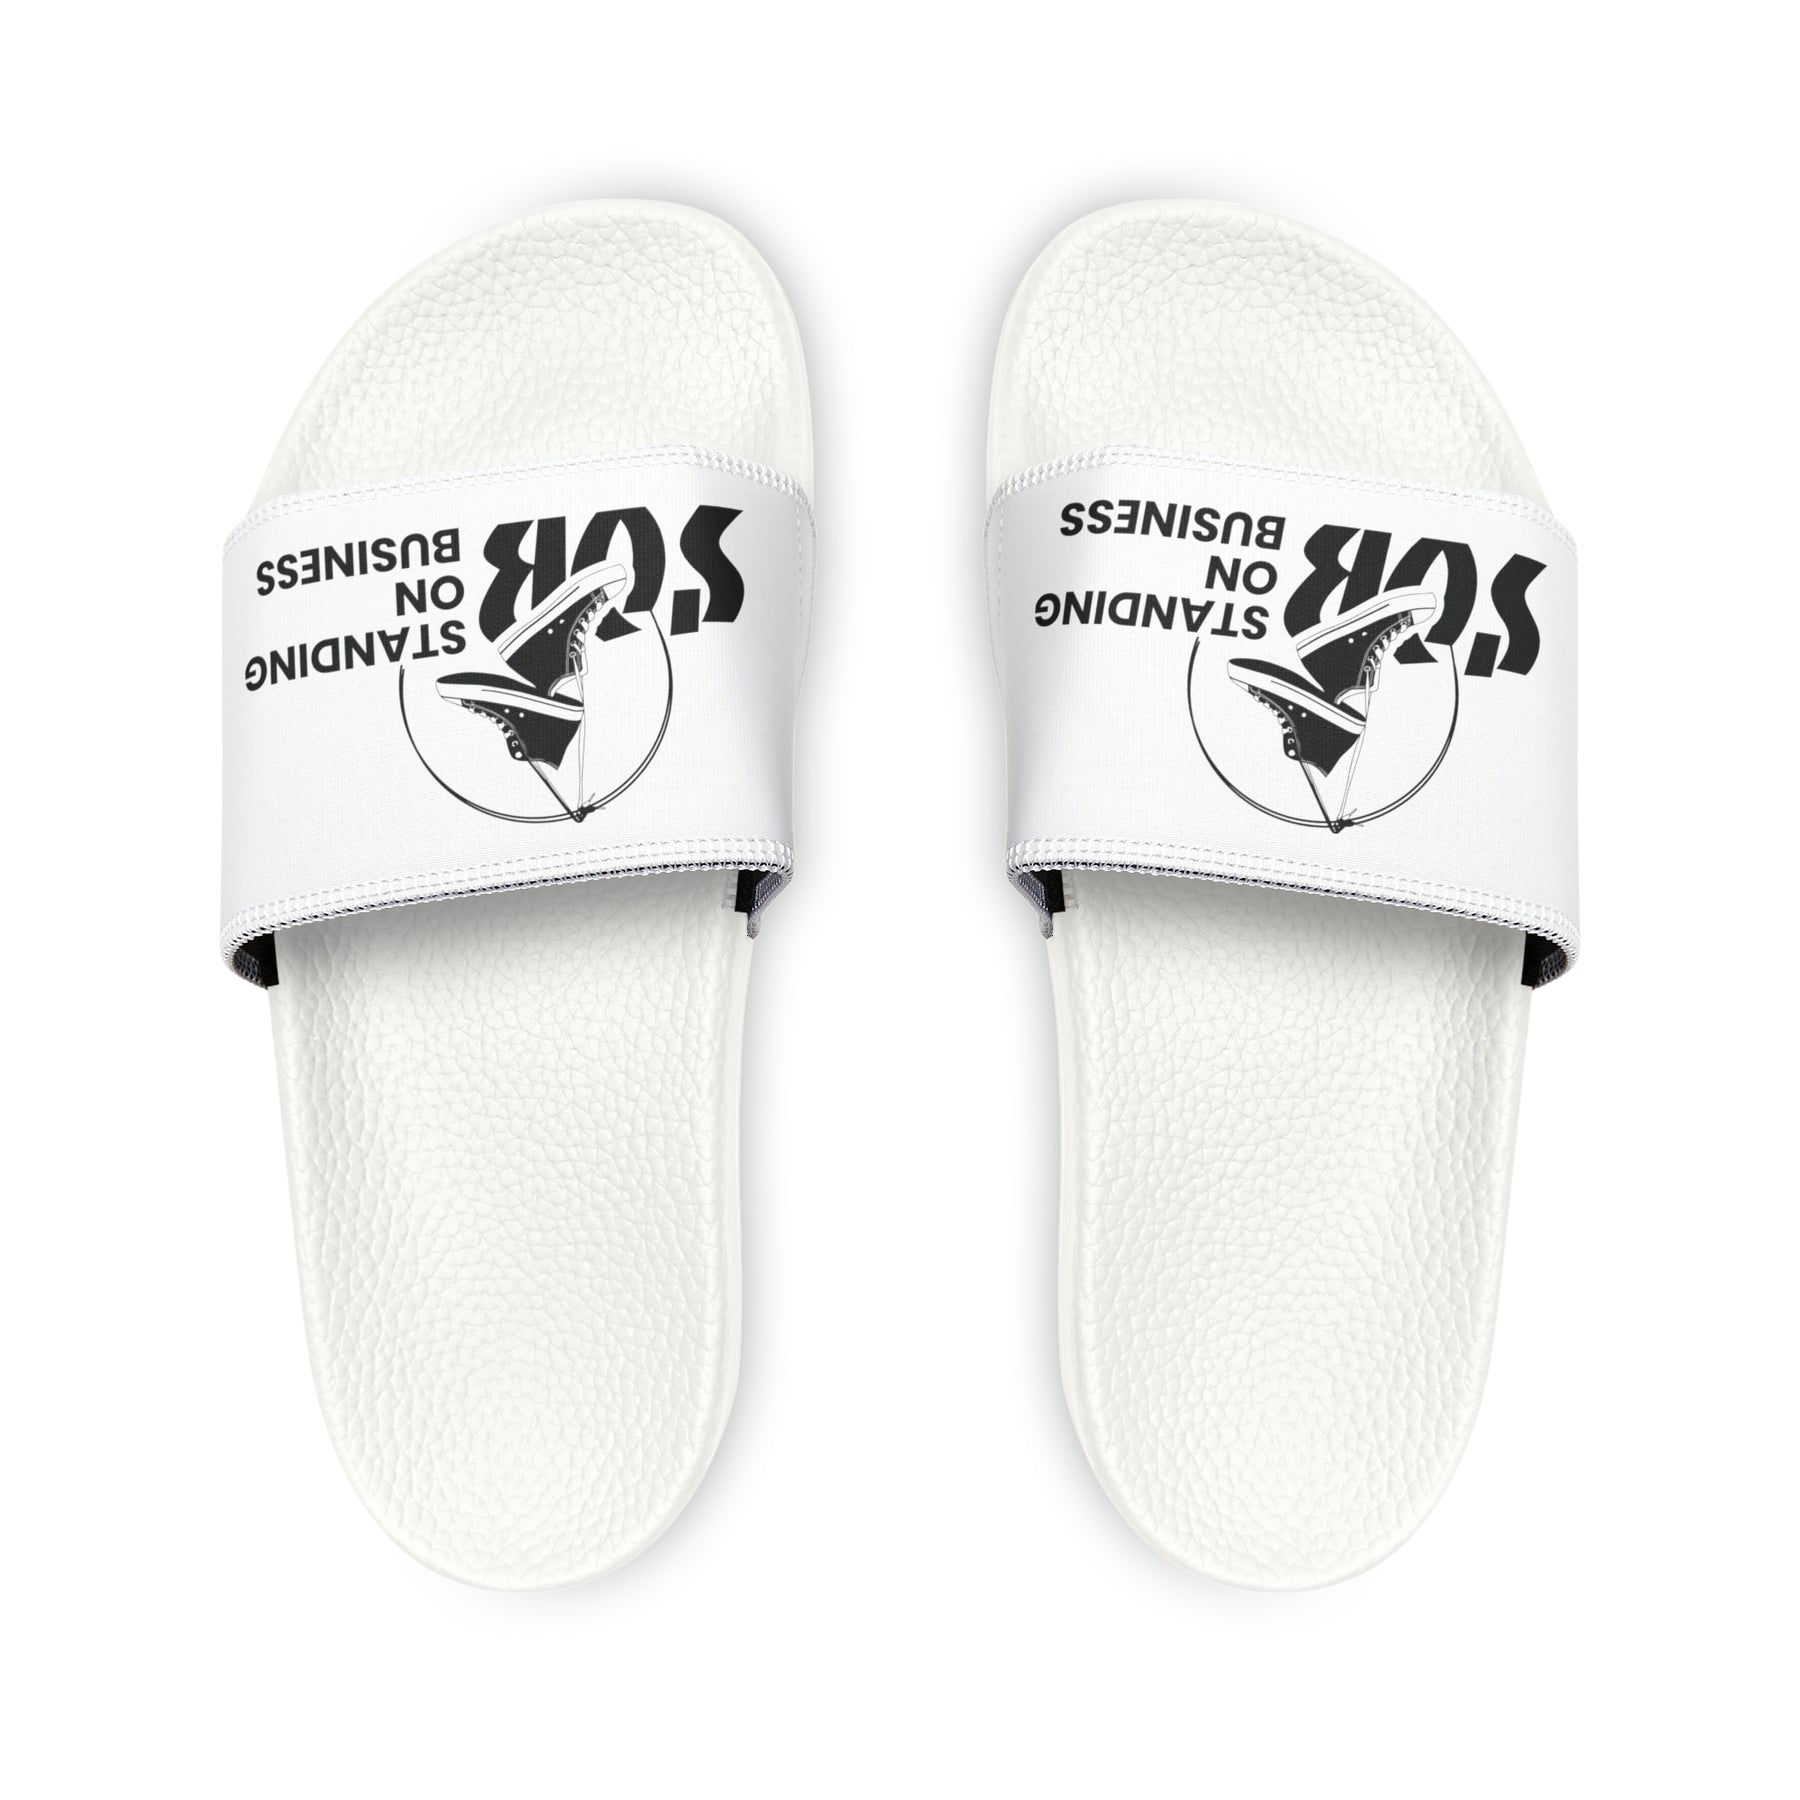 SOB White/Black Logo Men's PU Slide Sandals